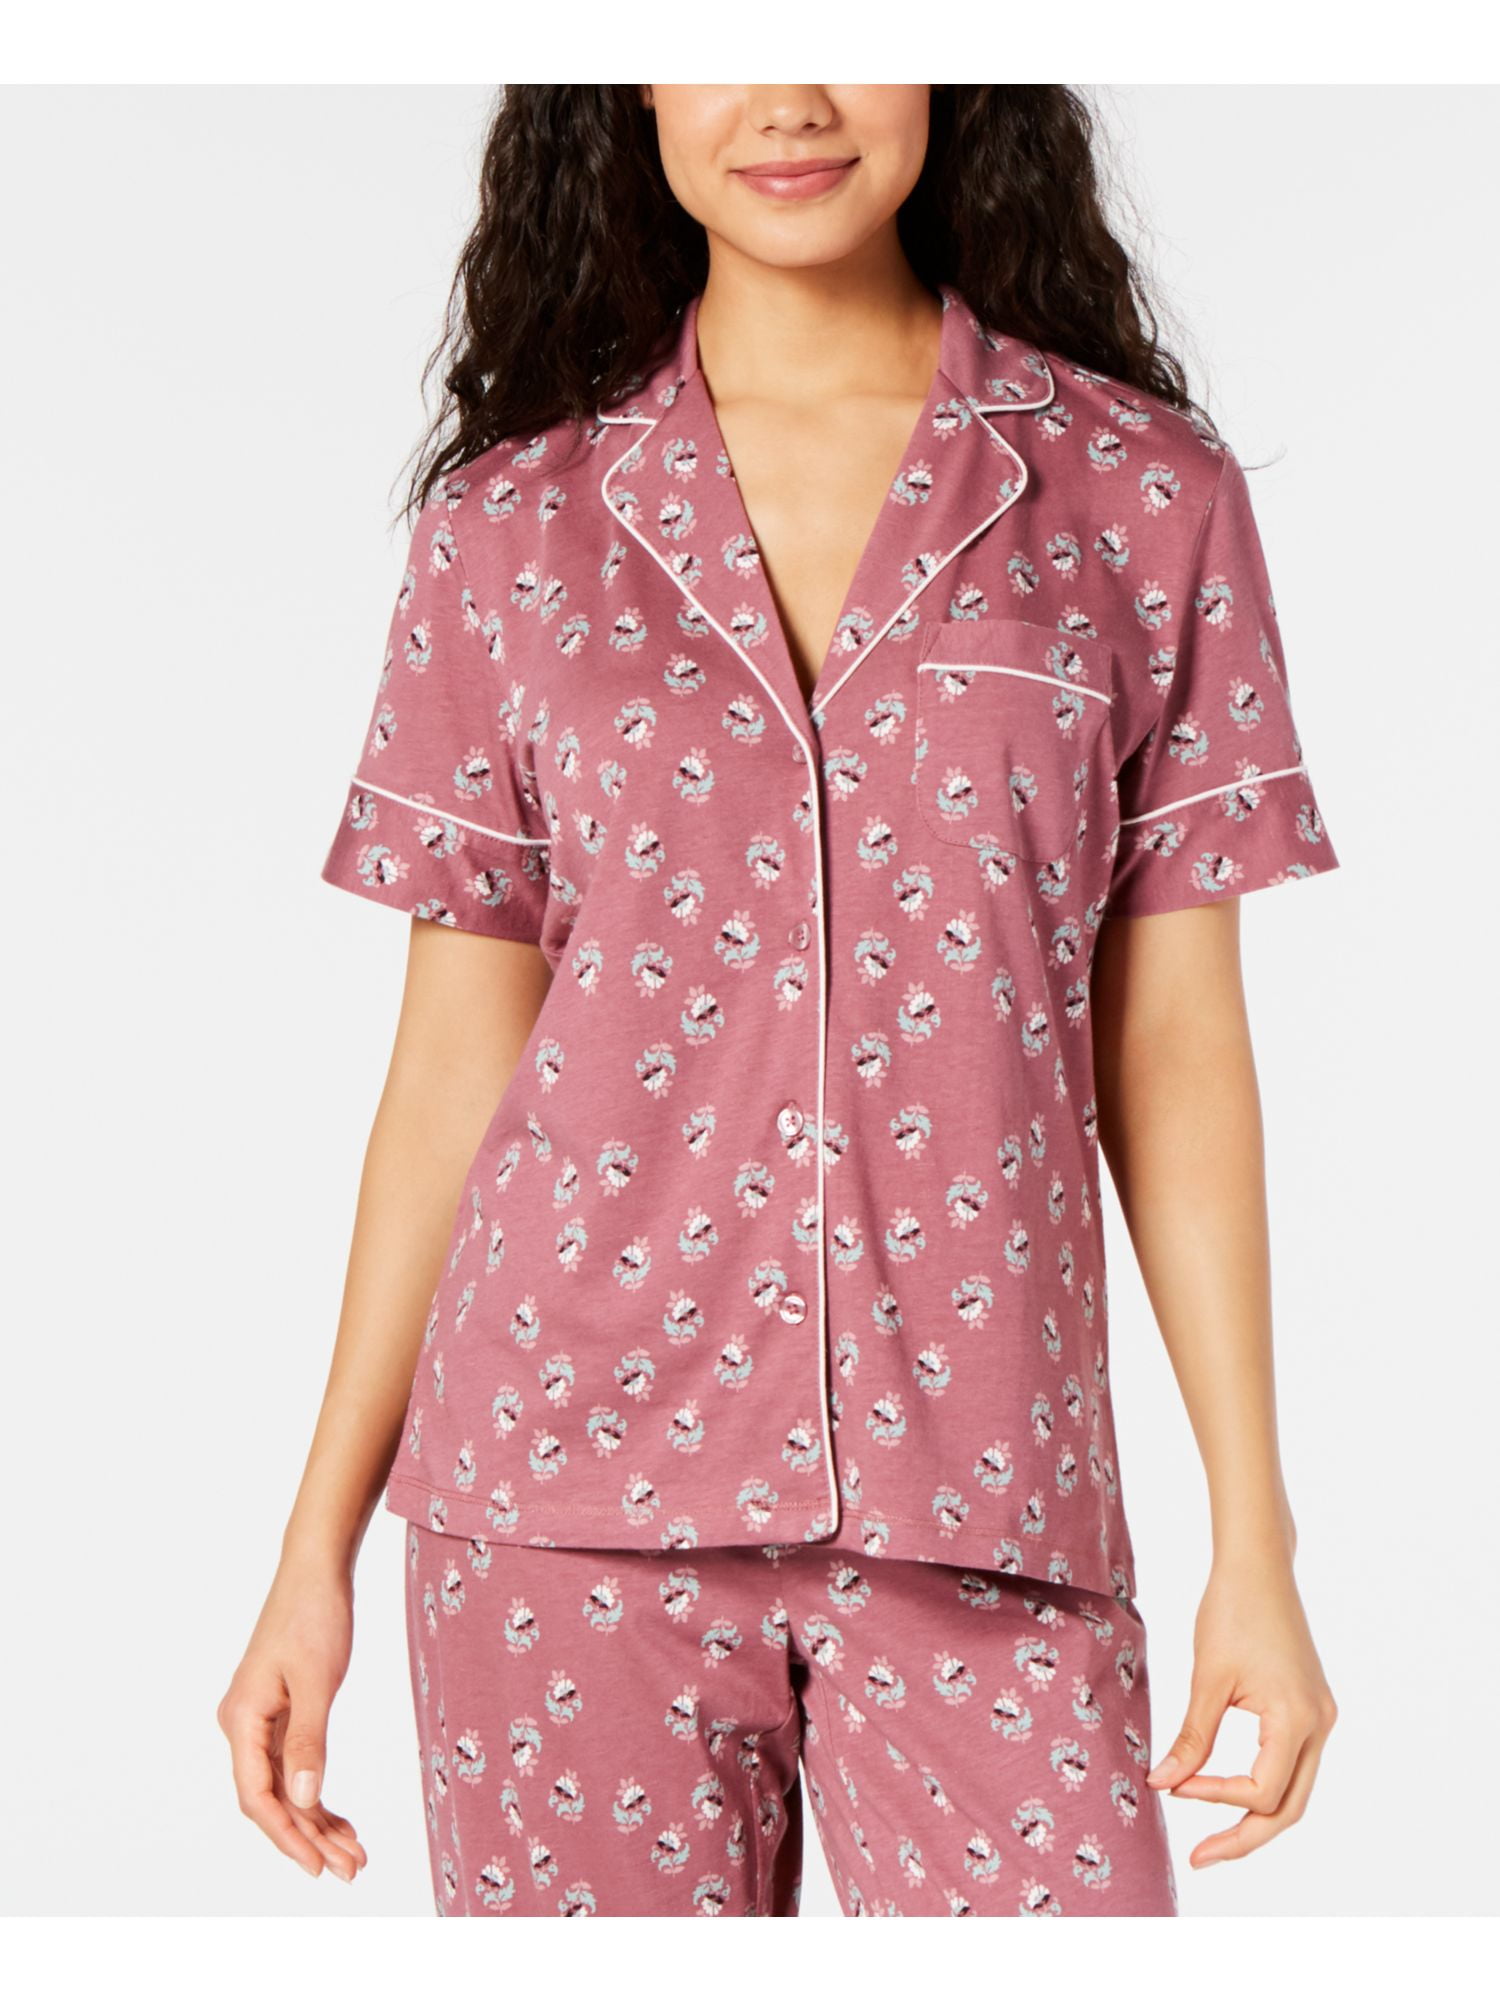 CHARTER CLUB Intimates Pink Floral Sleepwear Shirt Size: XS 